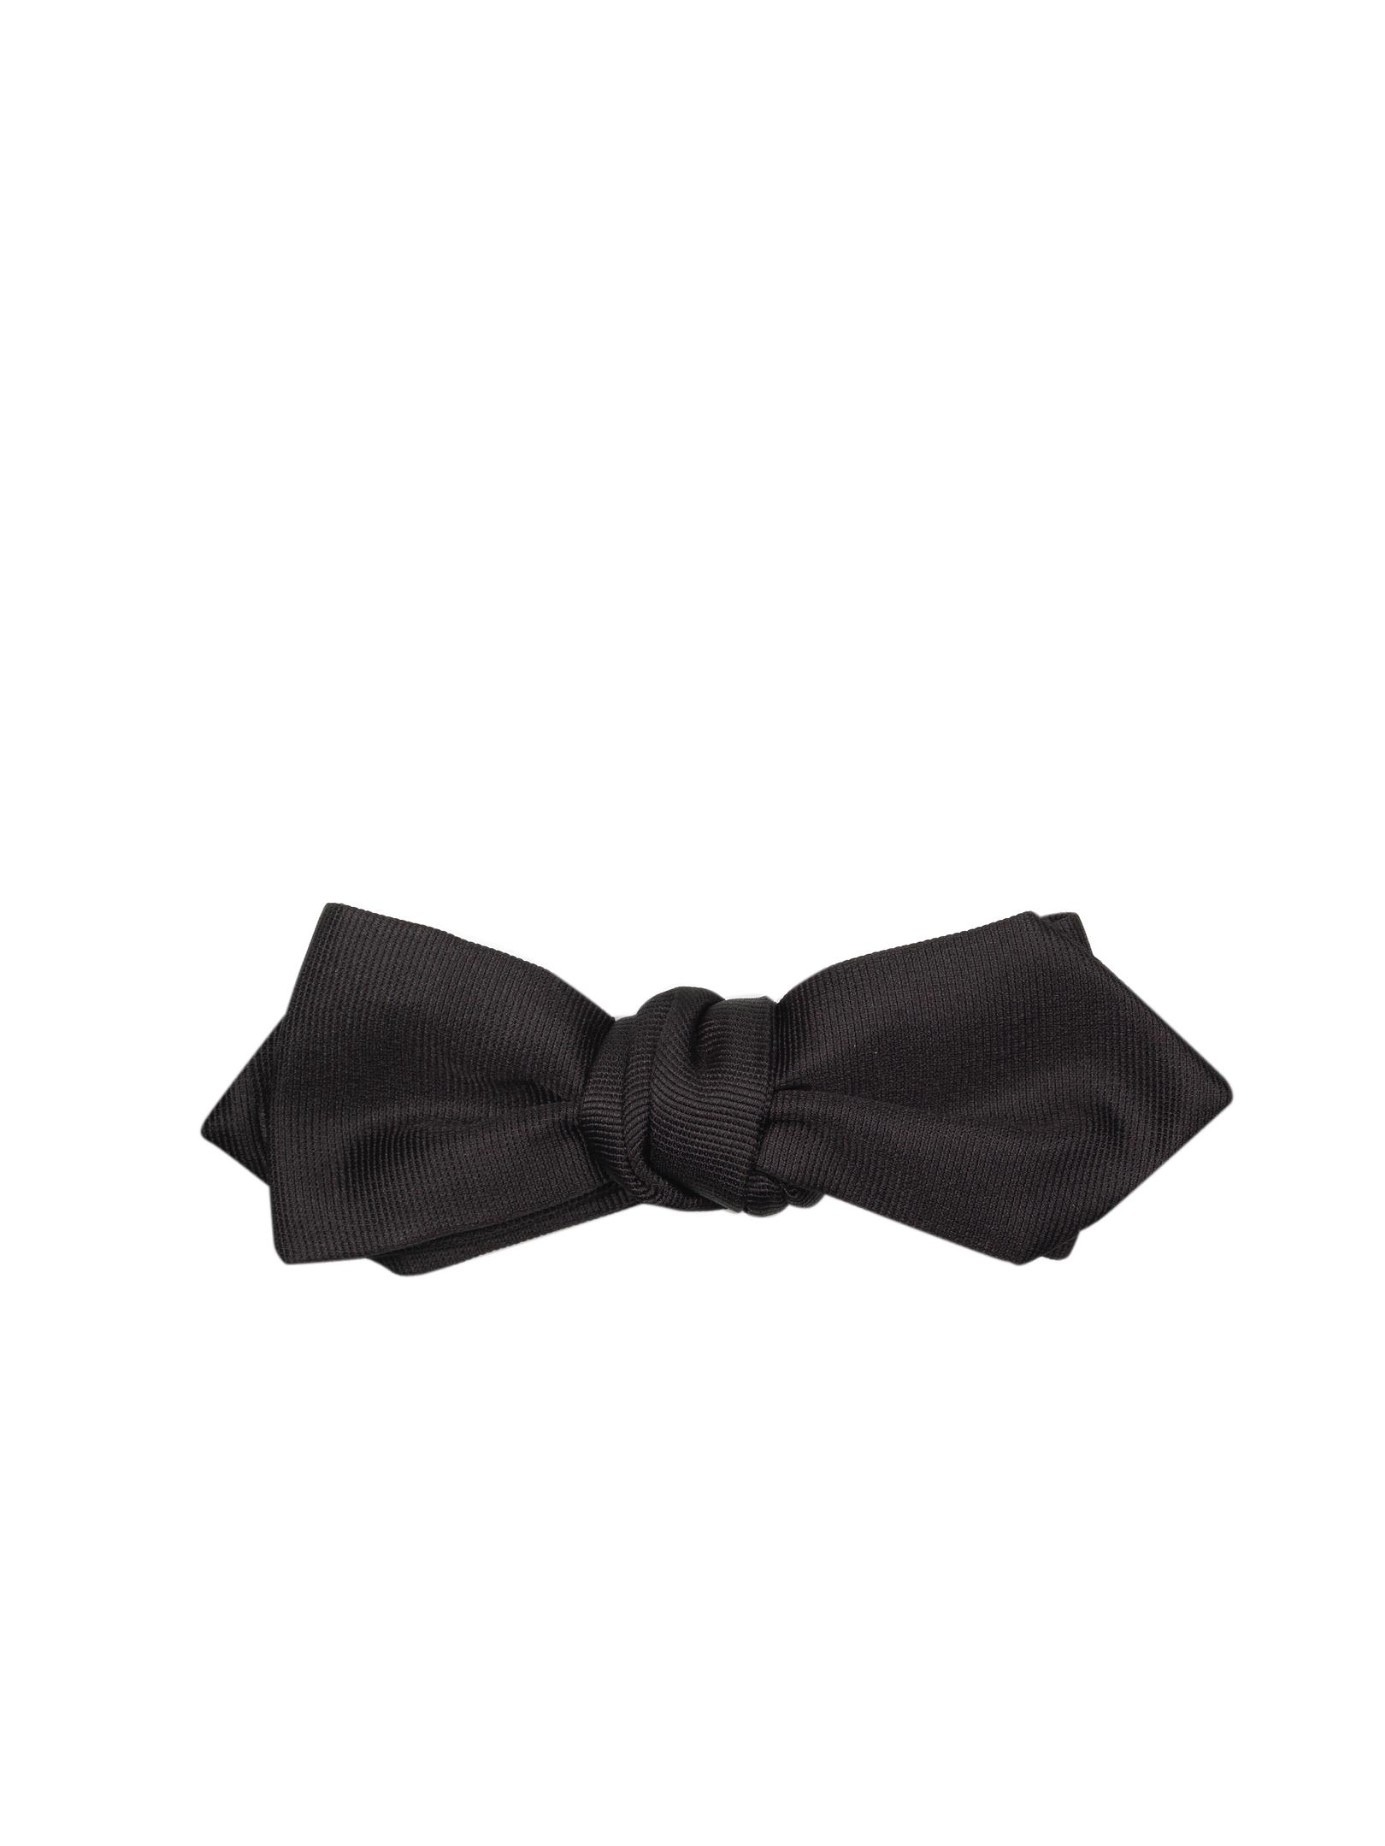 Black GG-jacquard silk bow tie, Gucci